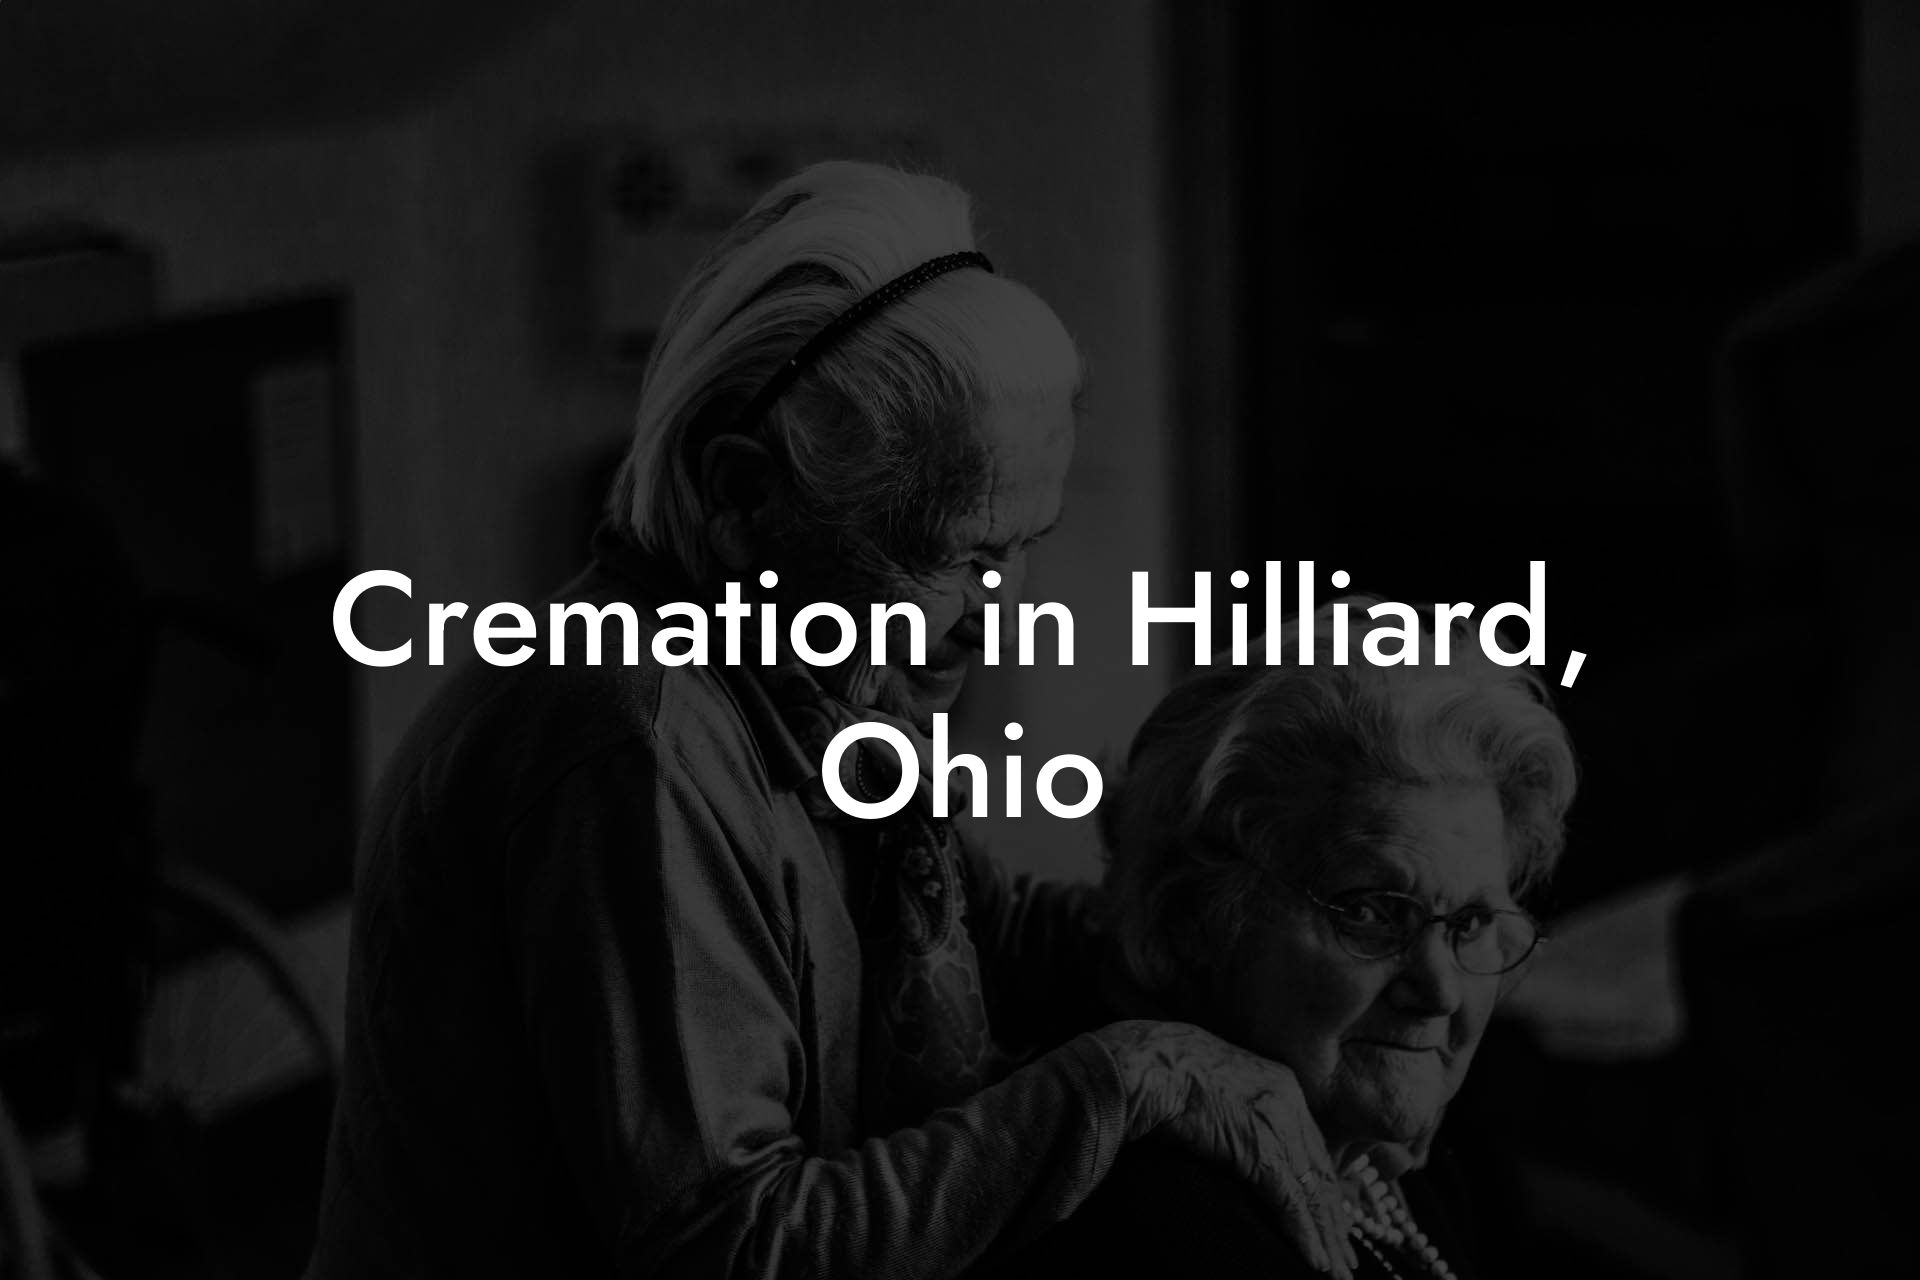 Cremation in Hilliard, Ohio